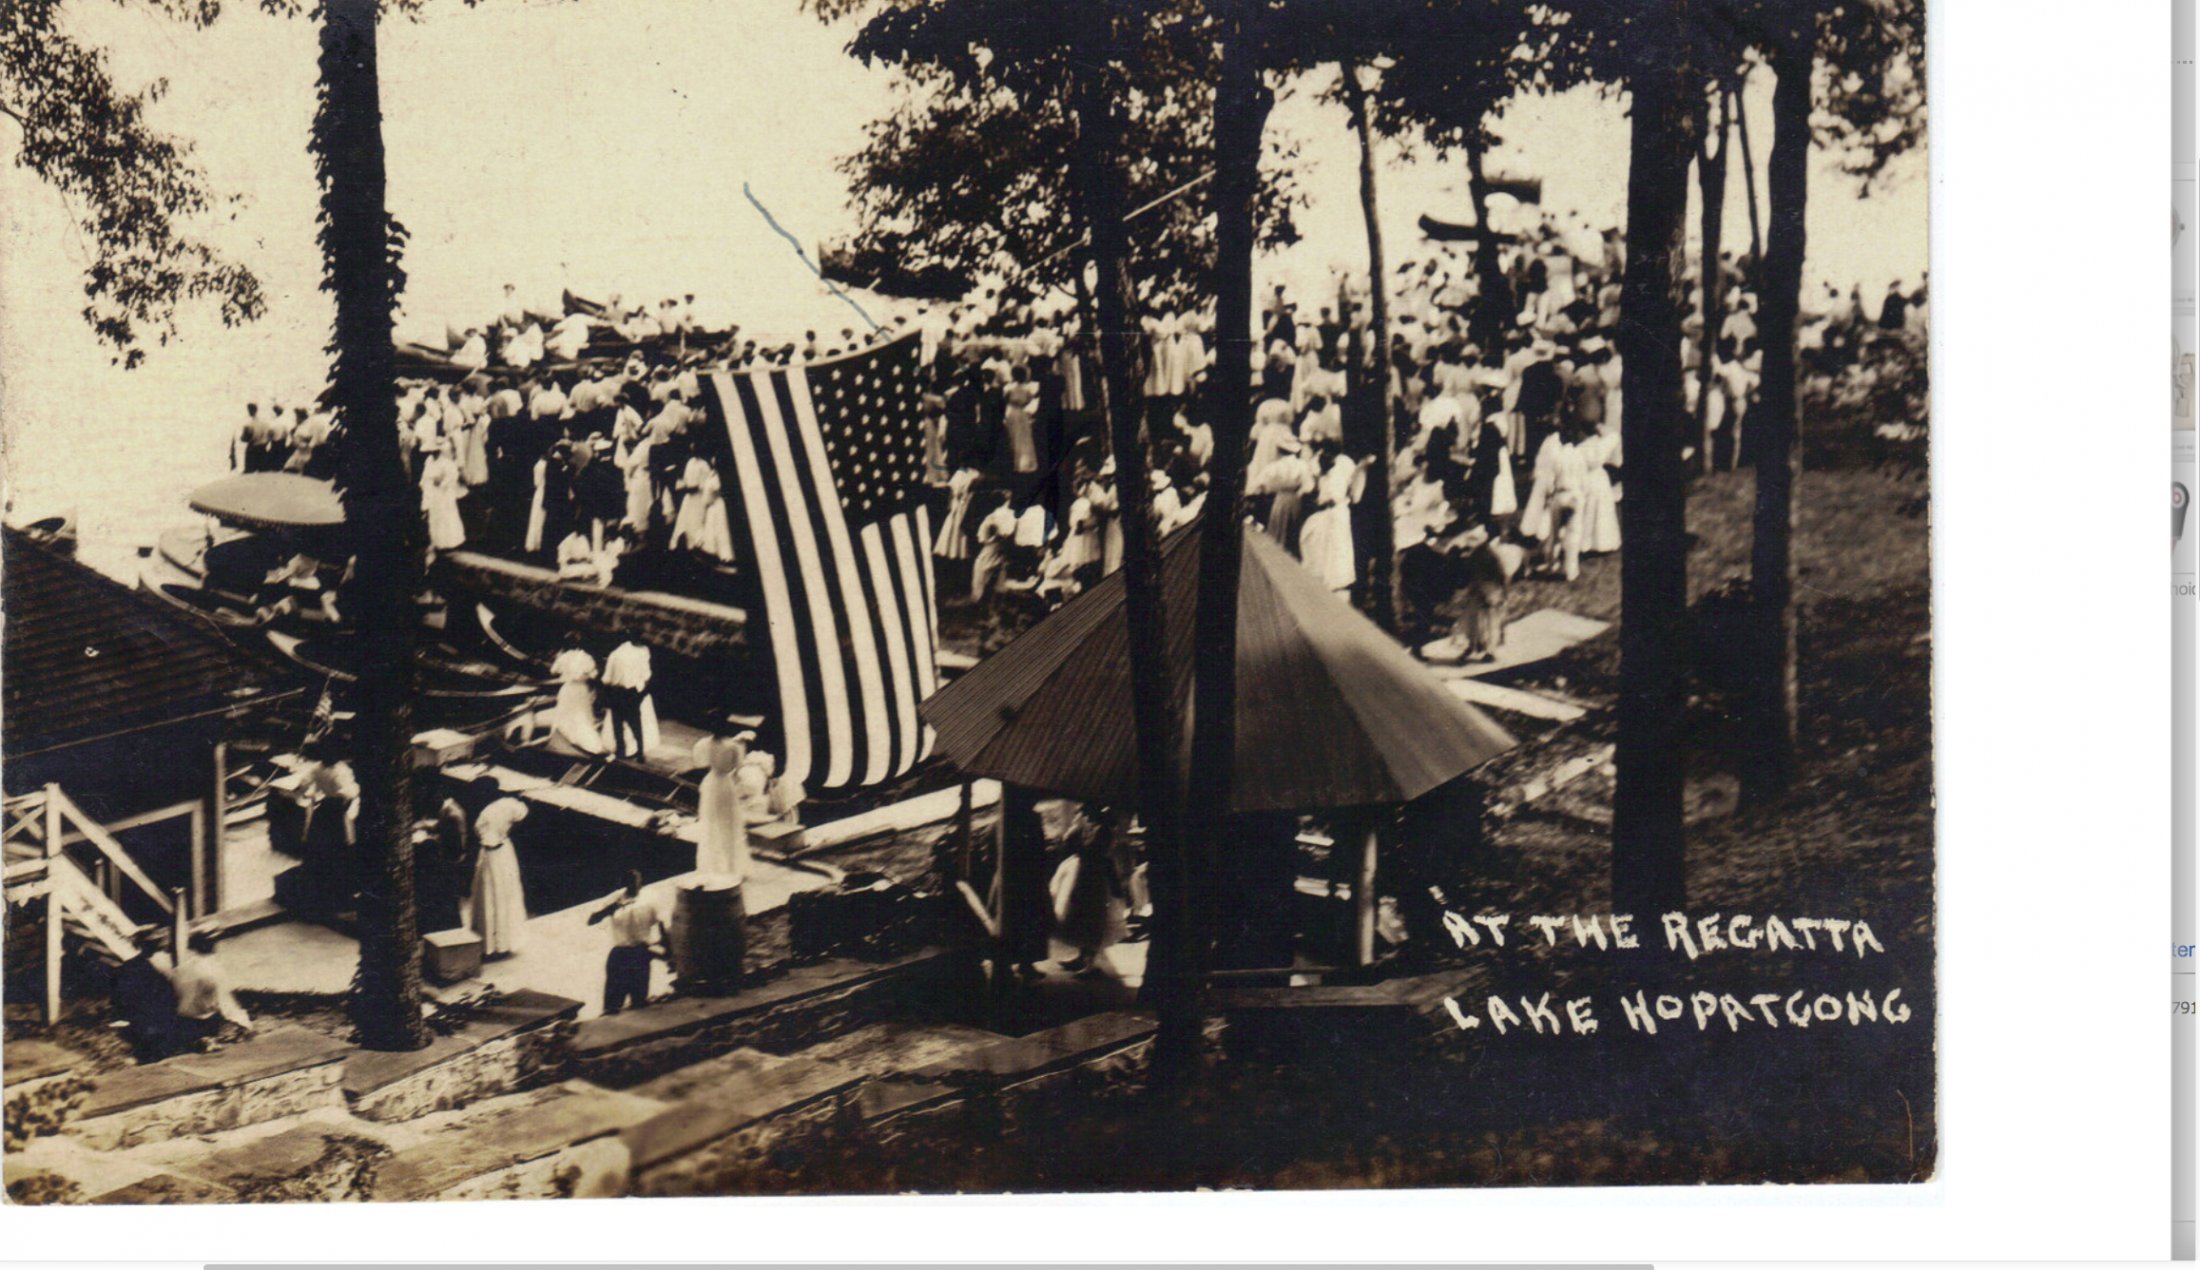 Lake Hopatcong - The Regatta - 1908